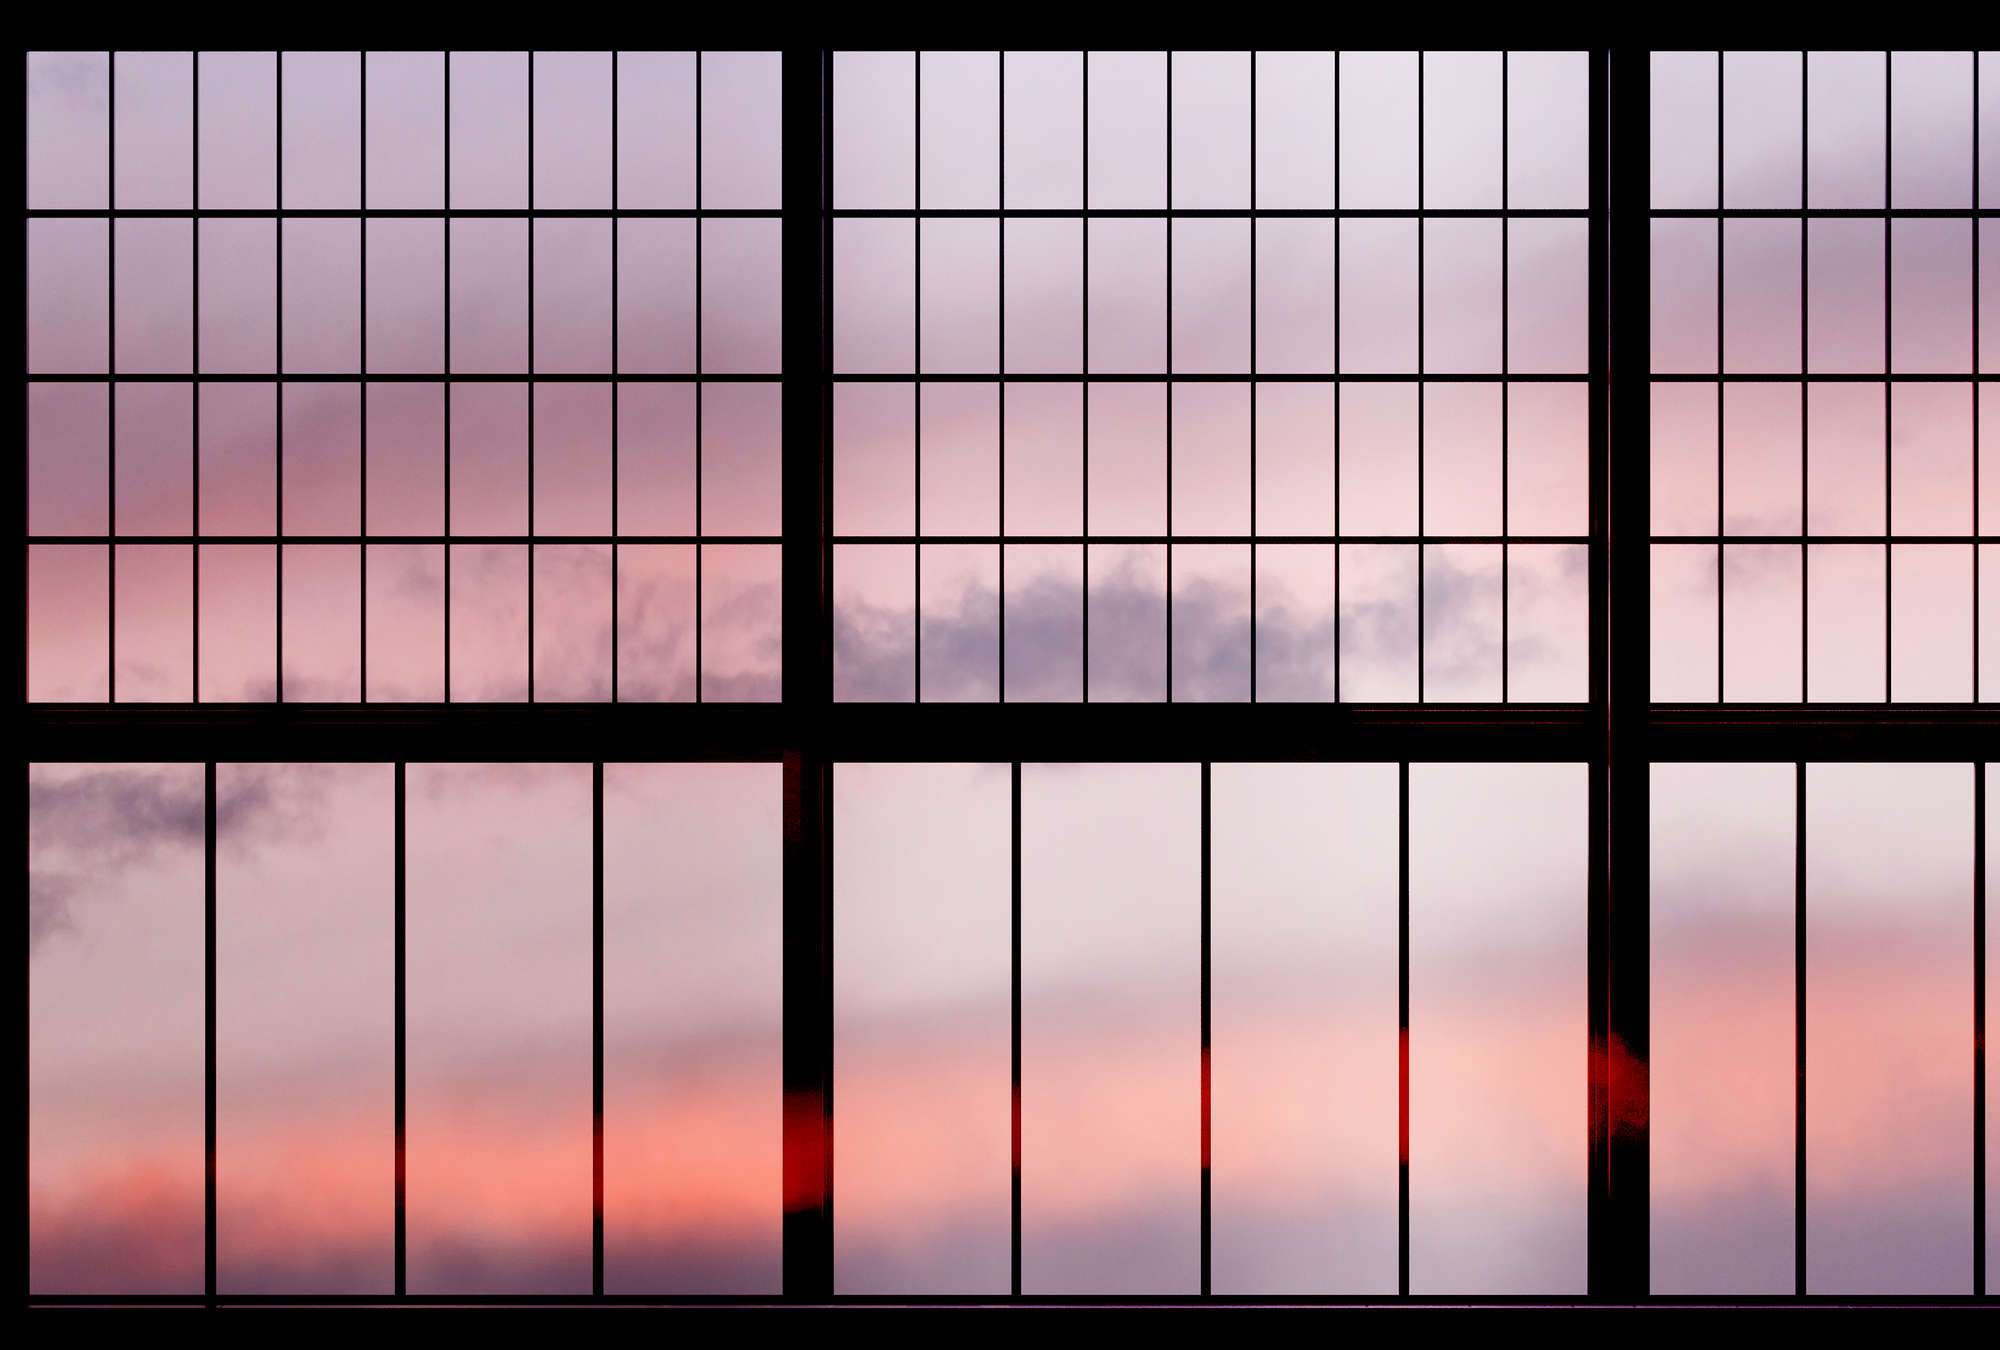             Sky 1 - Fotomural Window View Sunrise - Rosa, Negro | Tejido sin tejer con textura
        